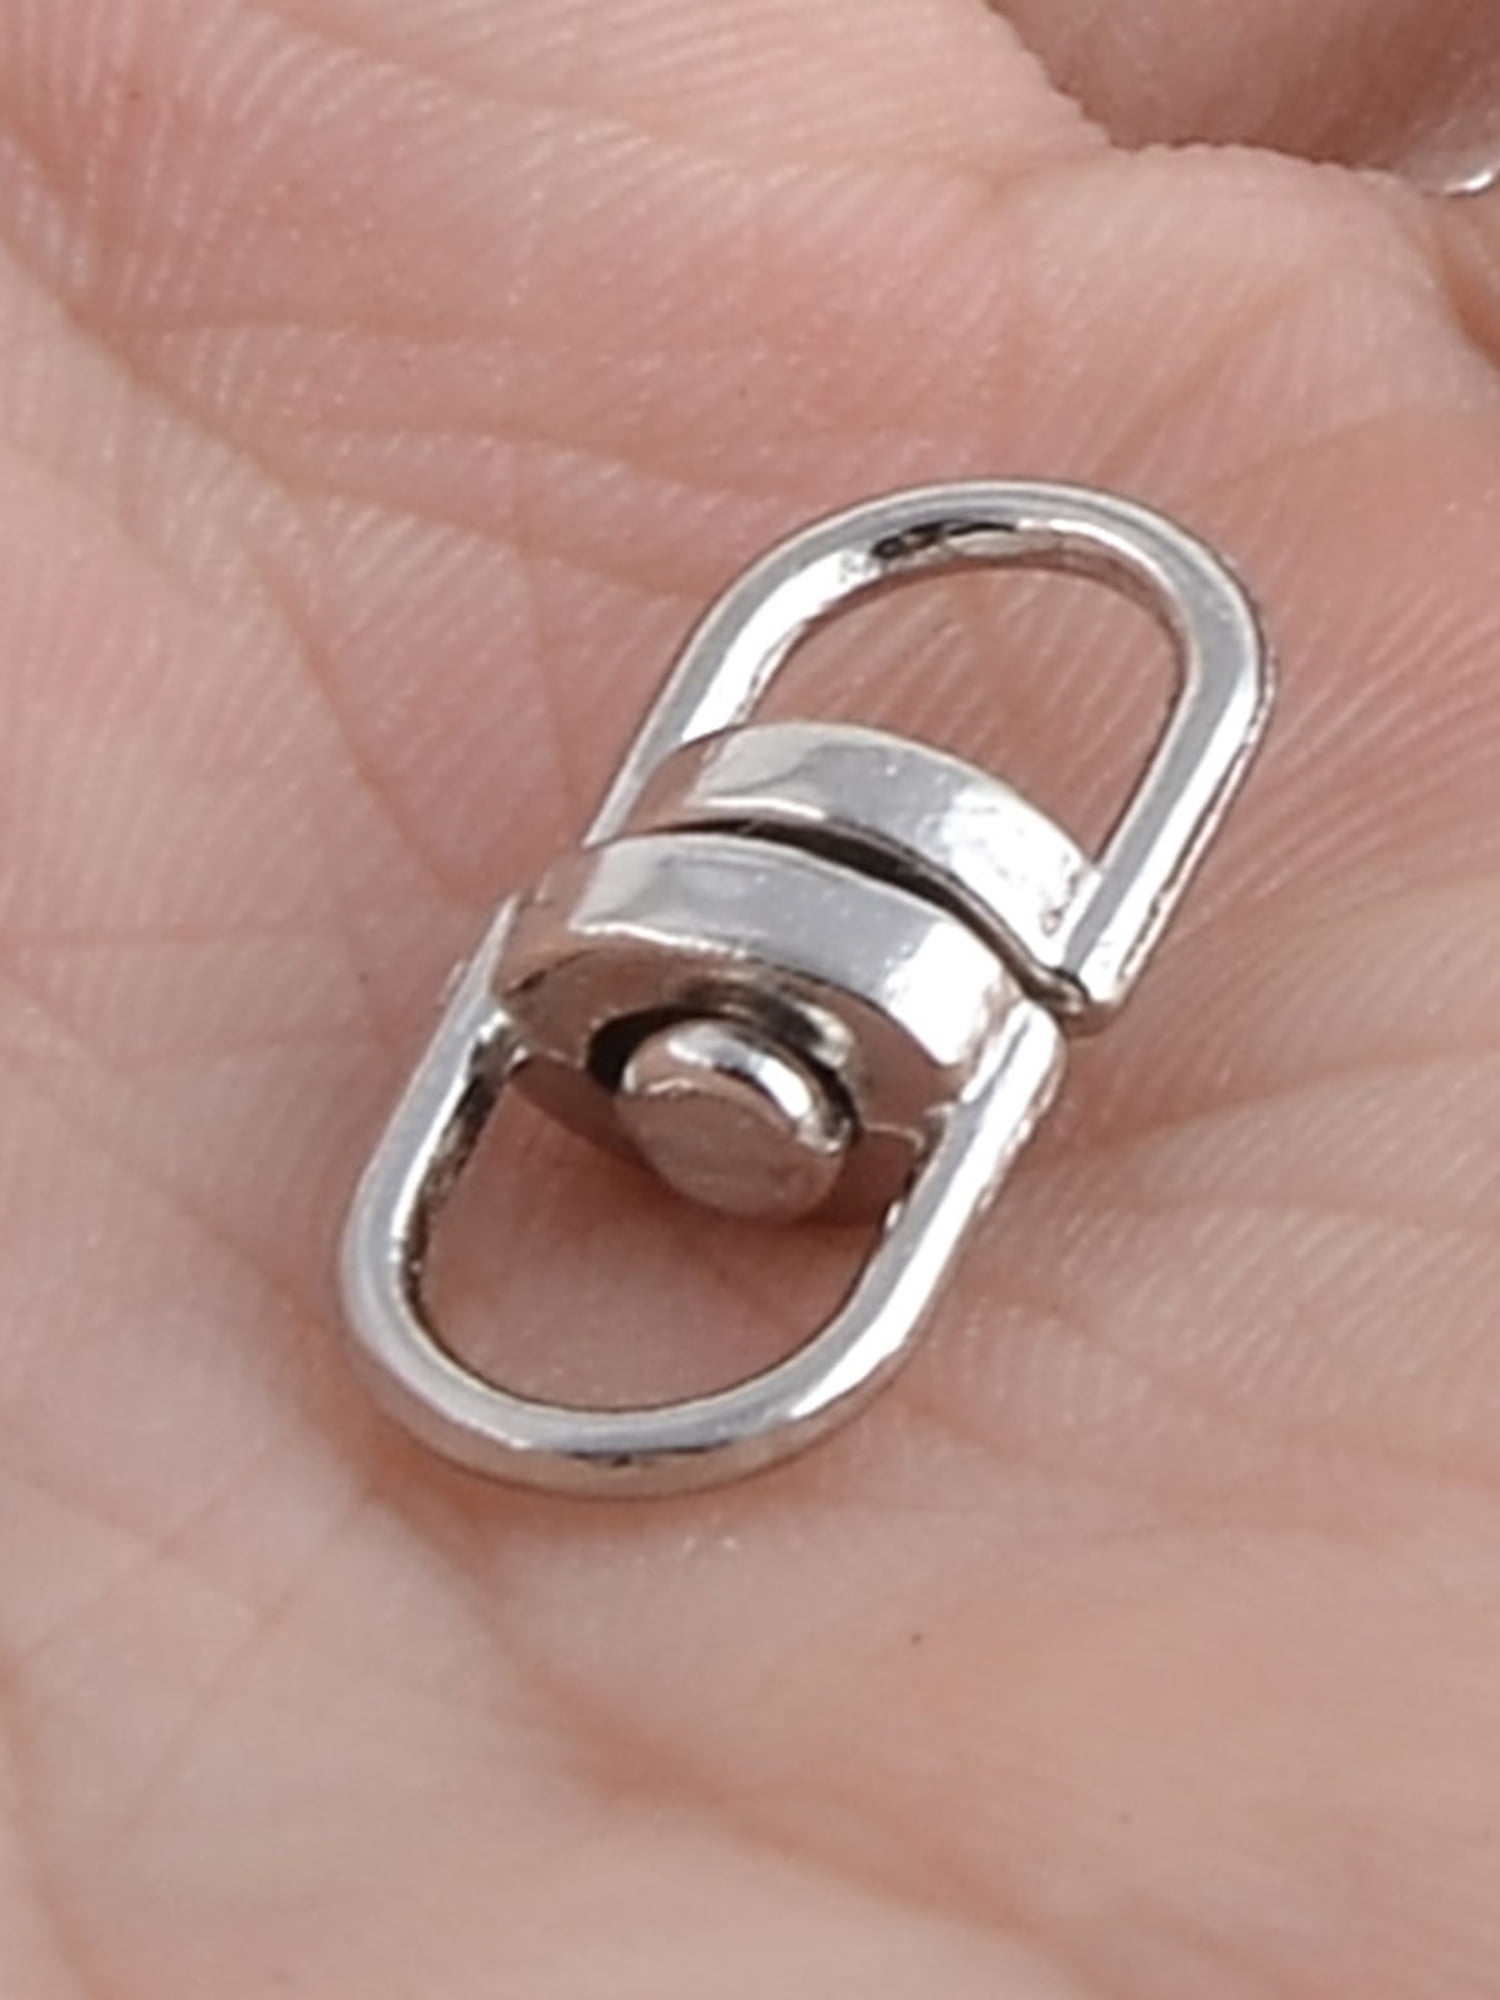 25mm big spring clip hooks finding nickel free 15,30,45pcs 